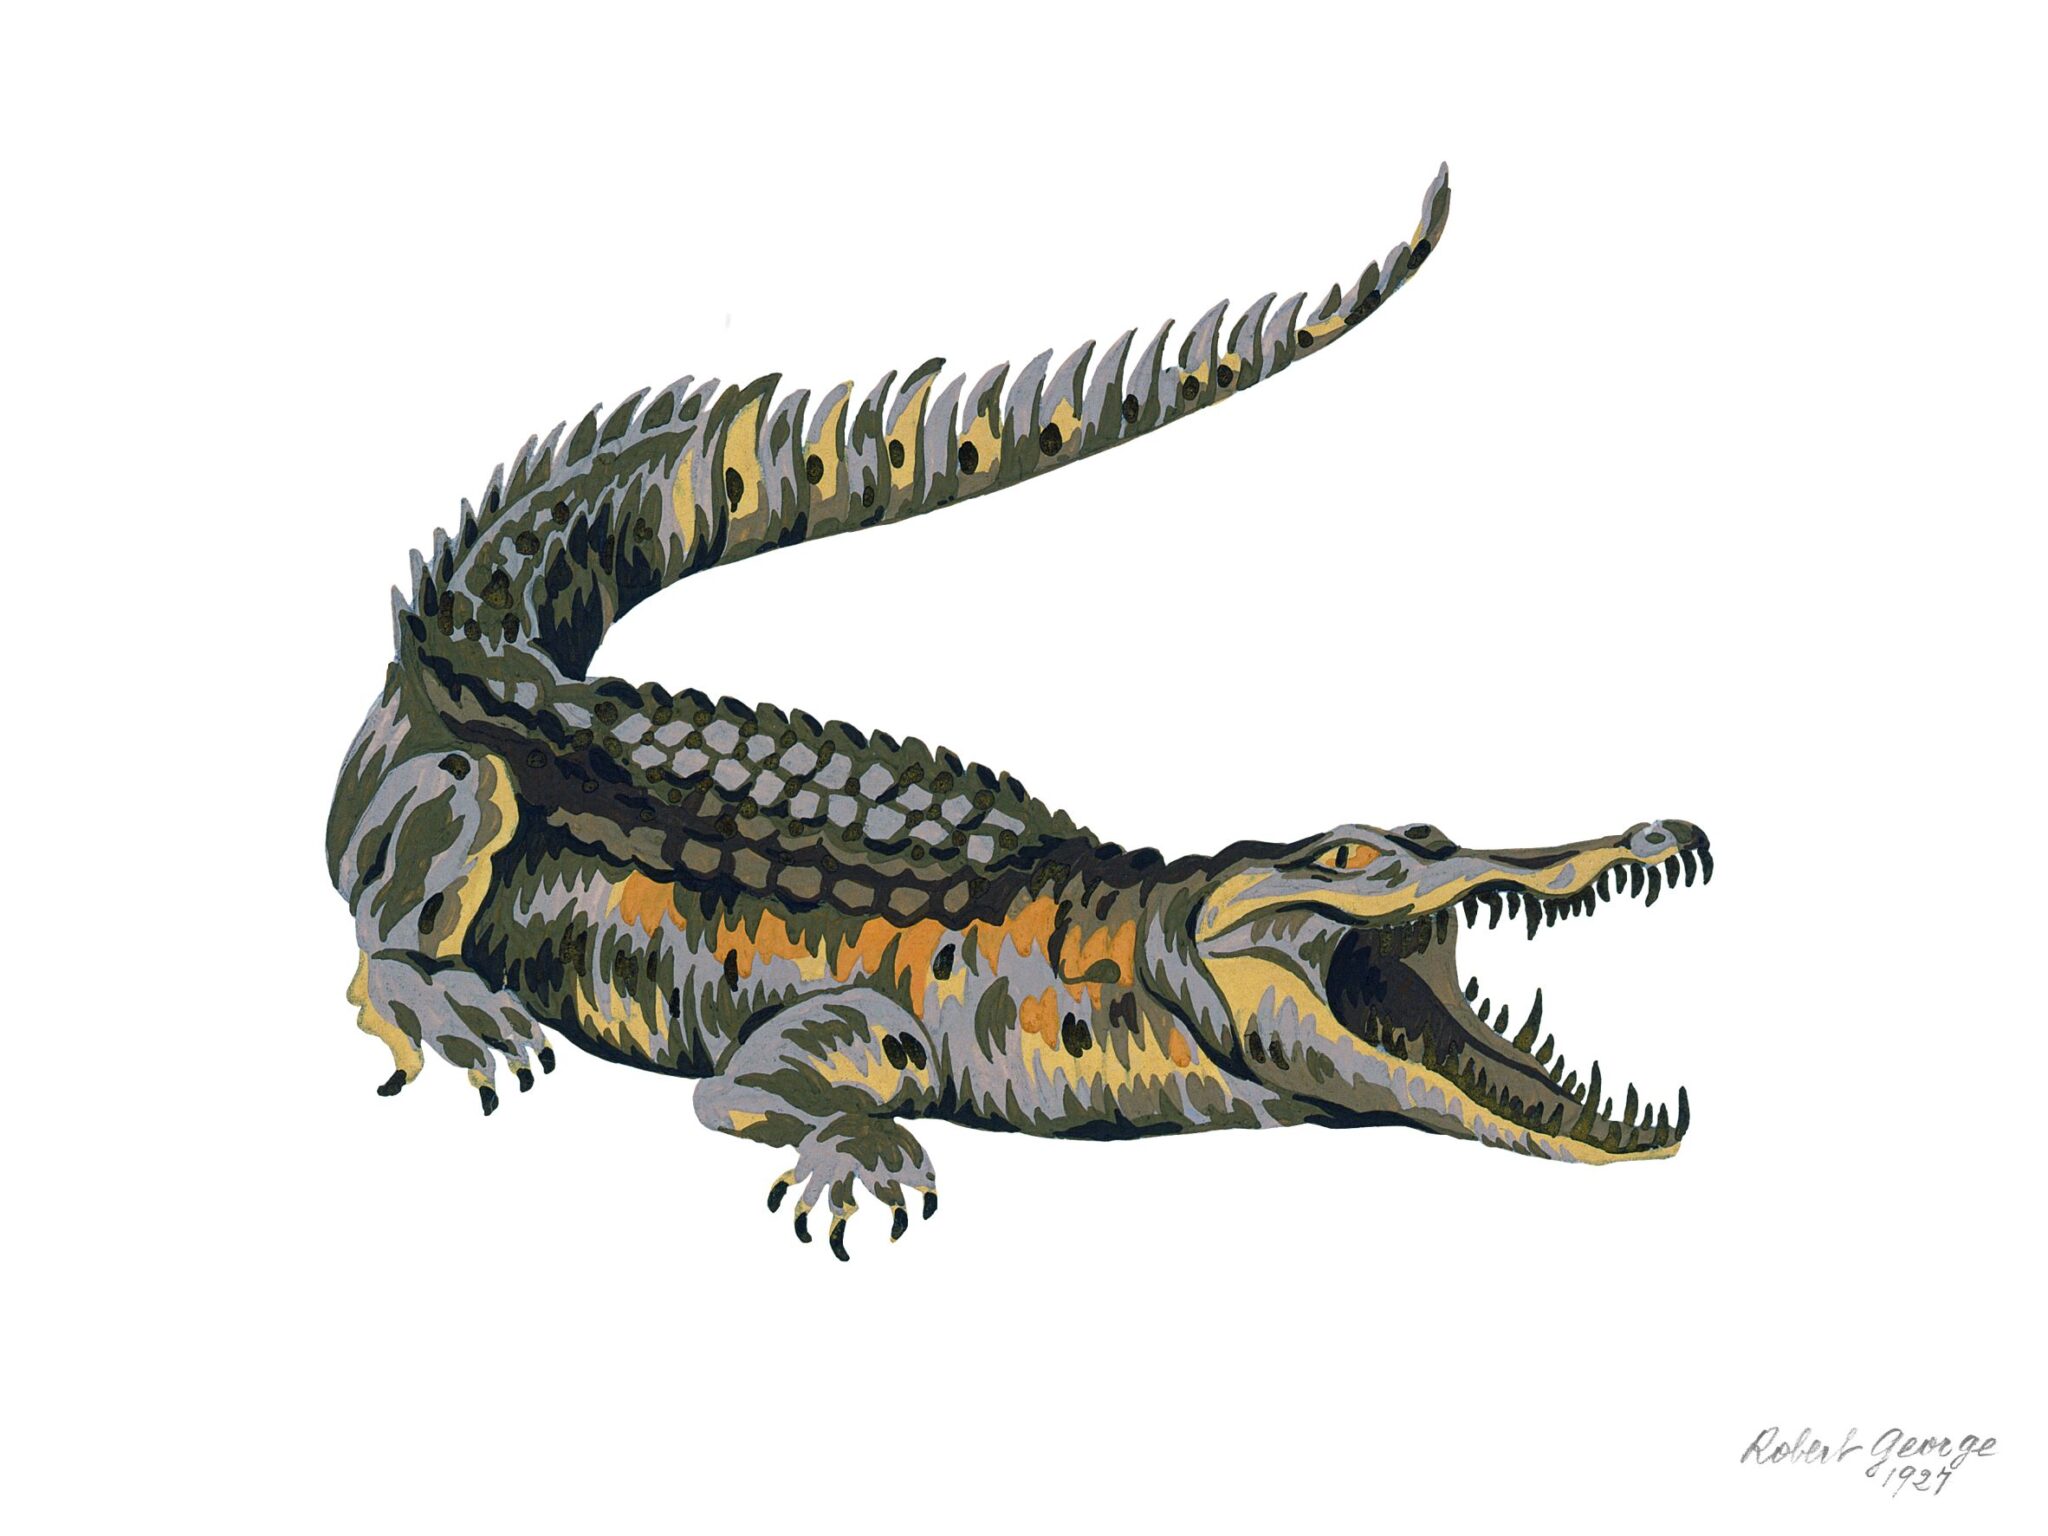 Crocodile de Robert George